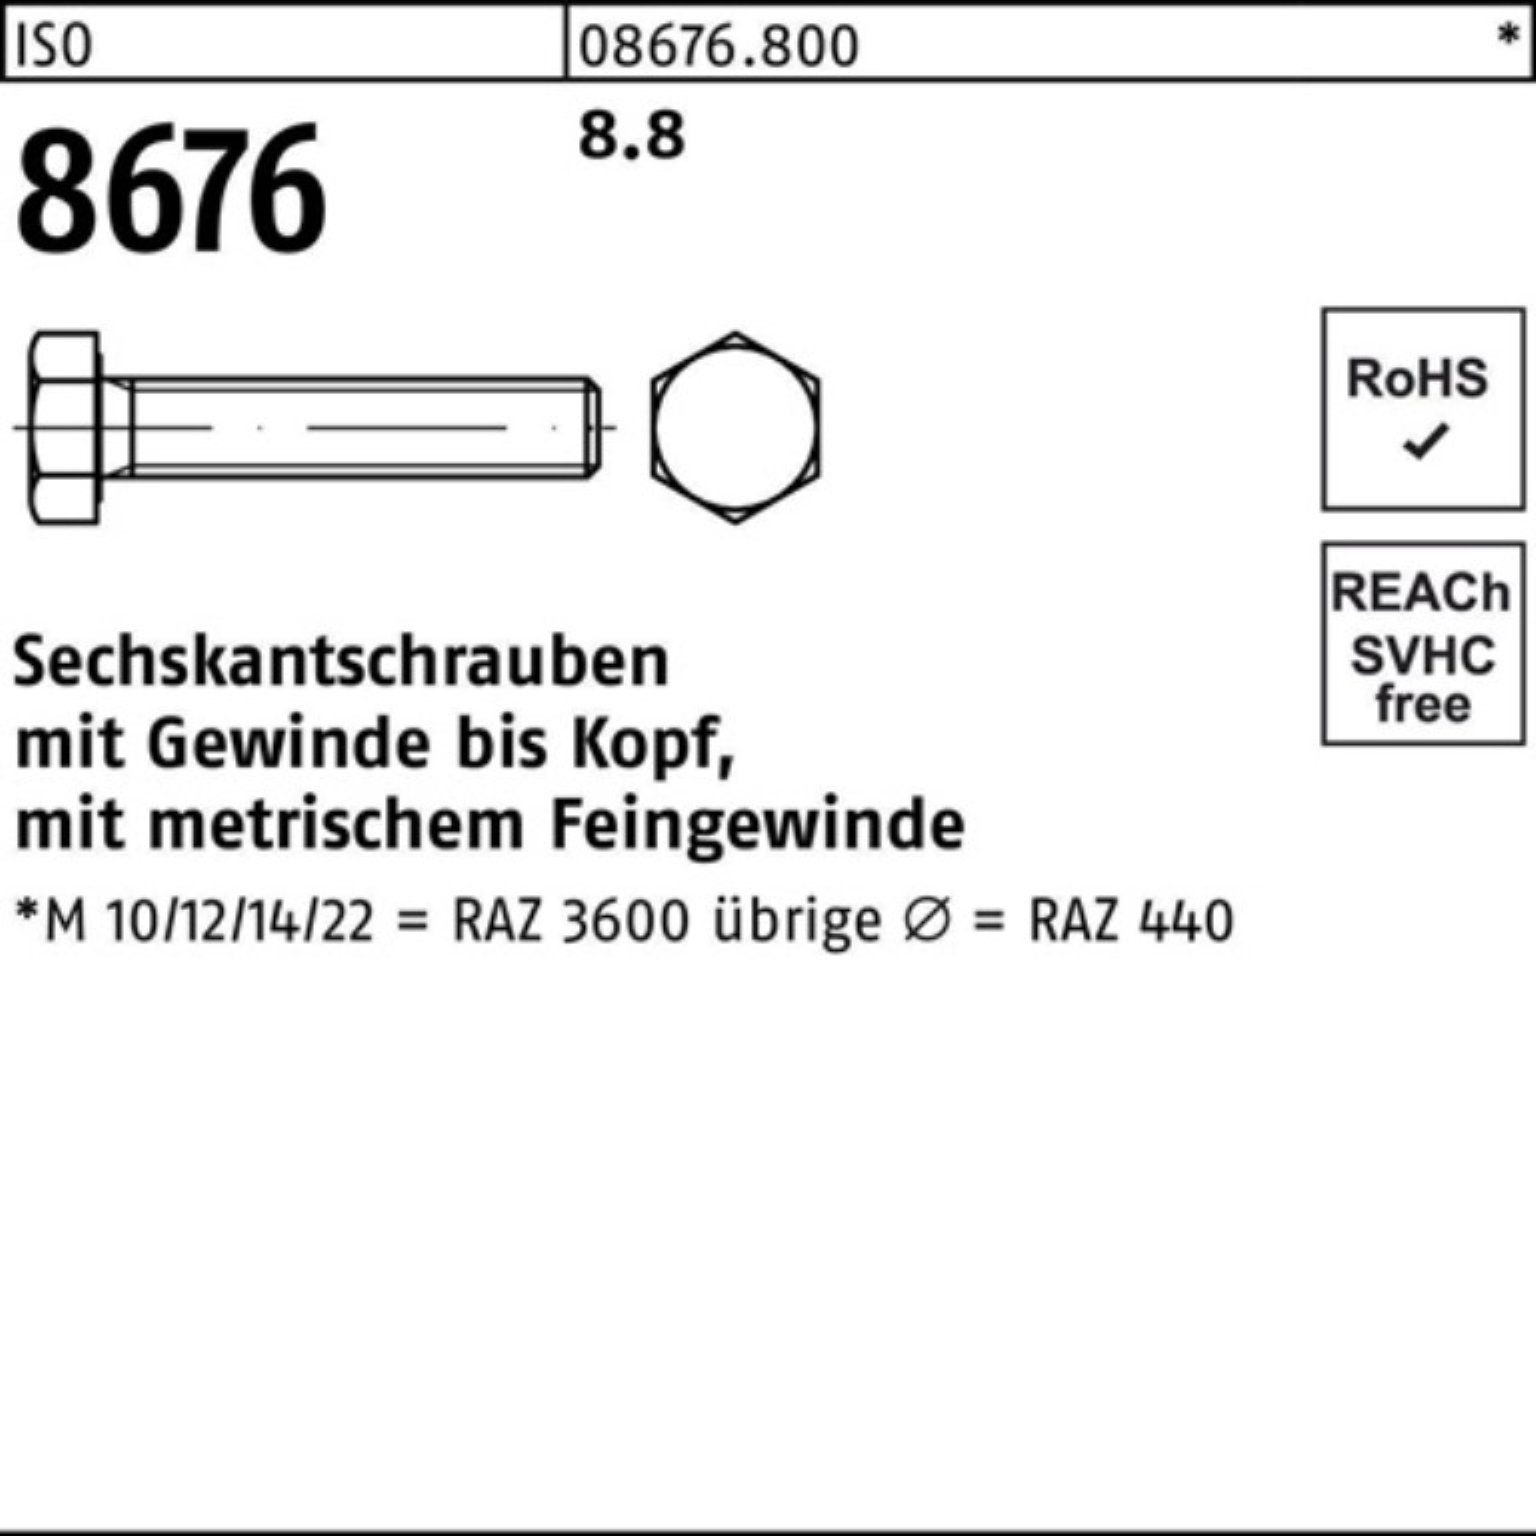 Reyher Pack Sechskantschraube M42x3x200 ISO Sechskantschraube 8.8 ISO 1 8676 Stück 100er 86 VG